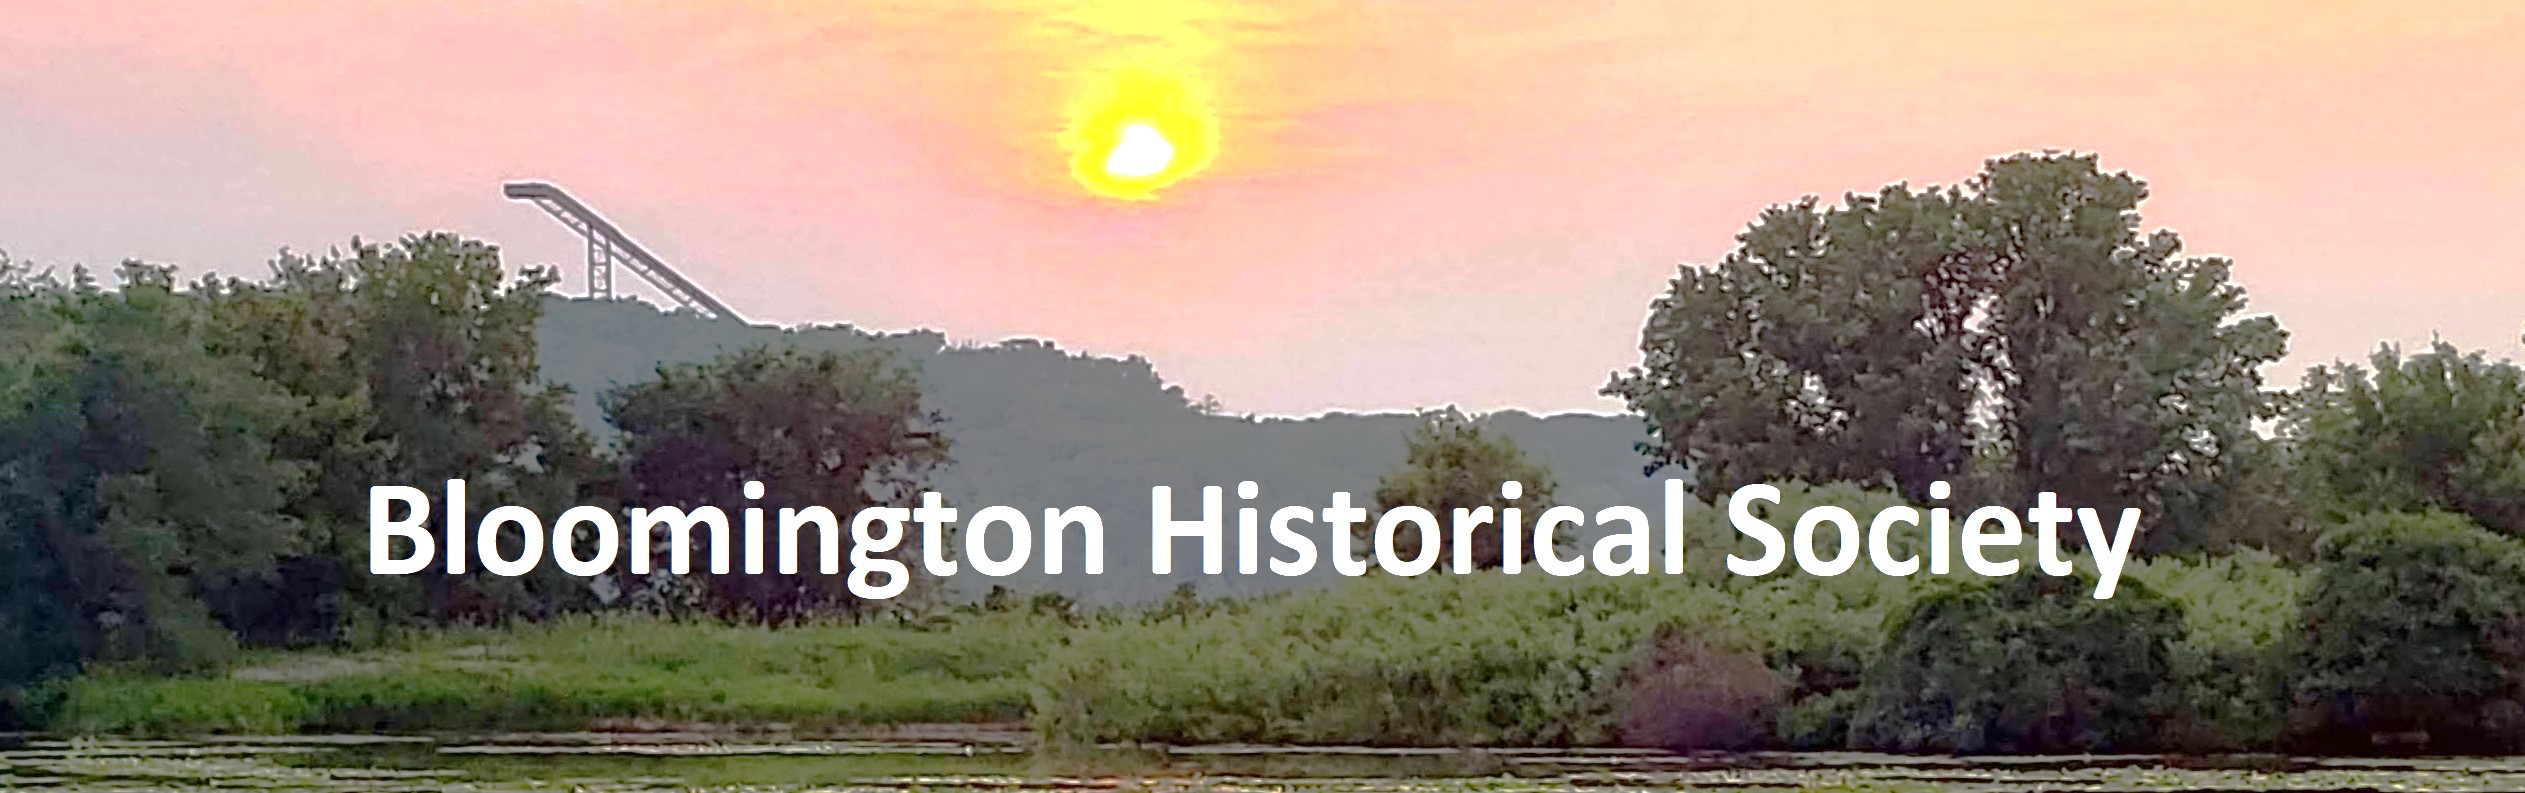 Bloomington Historical Society banner